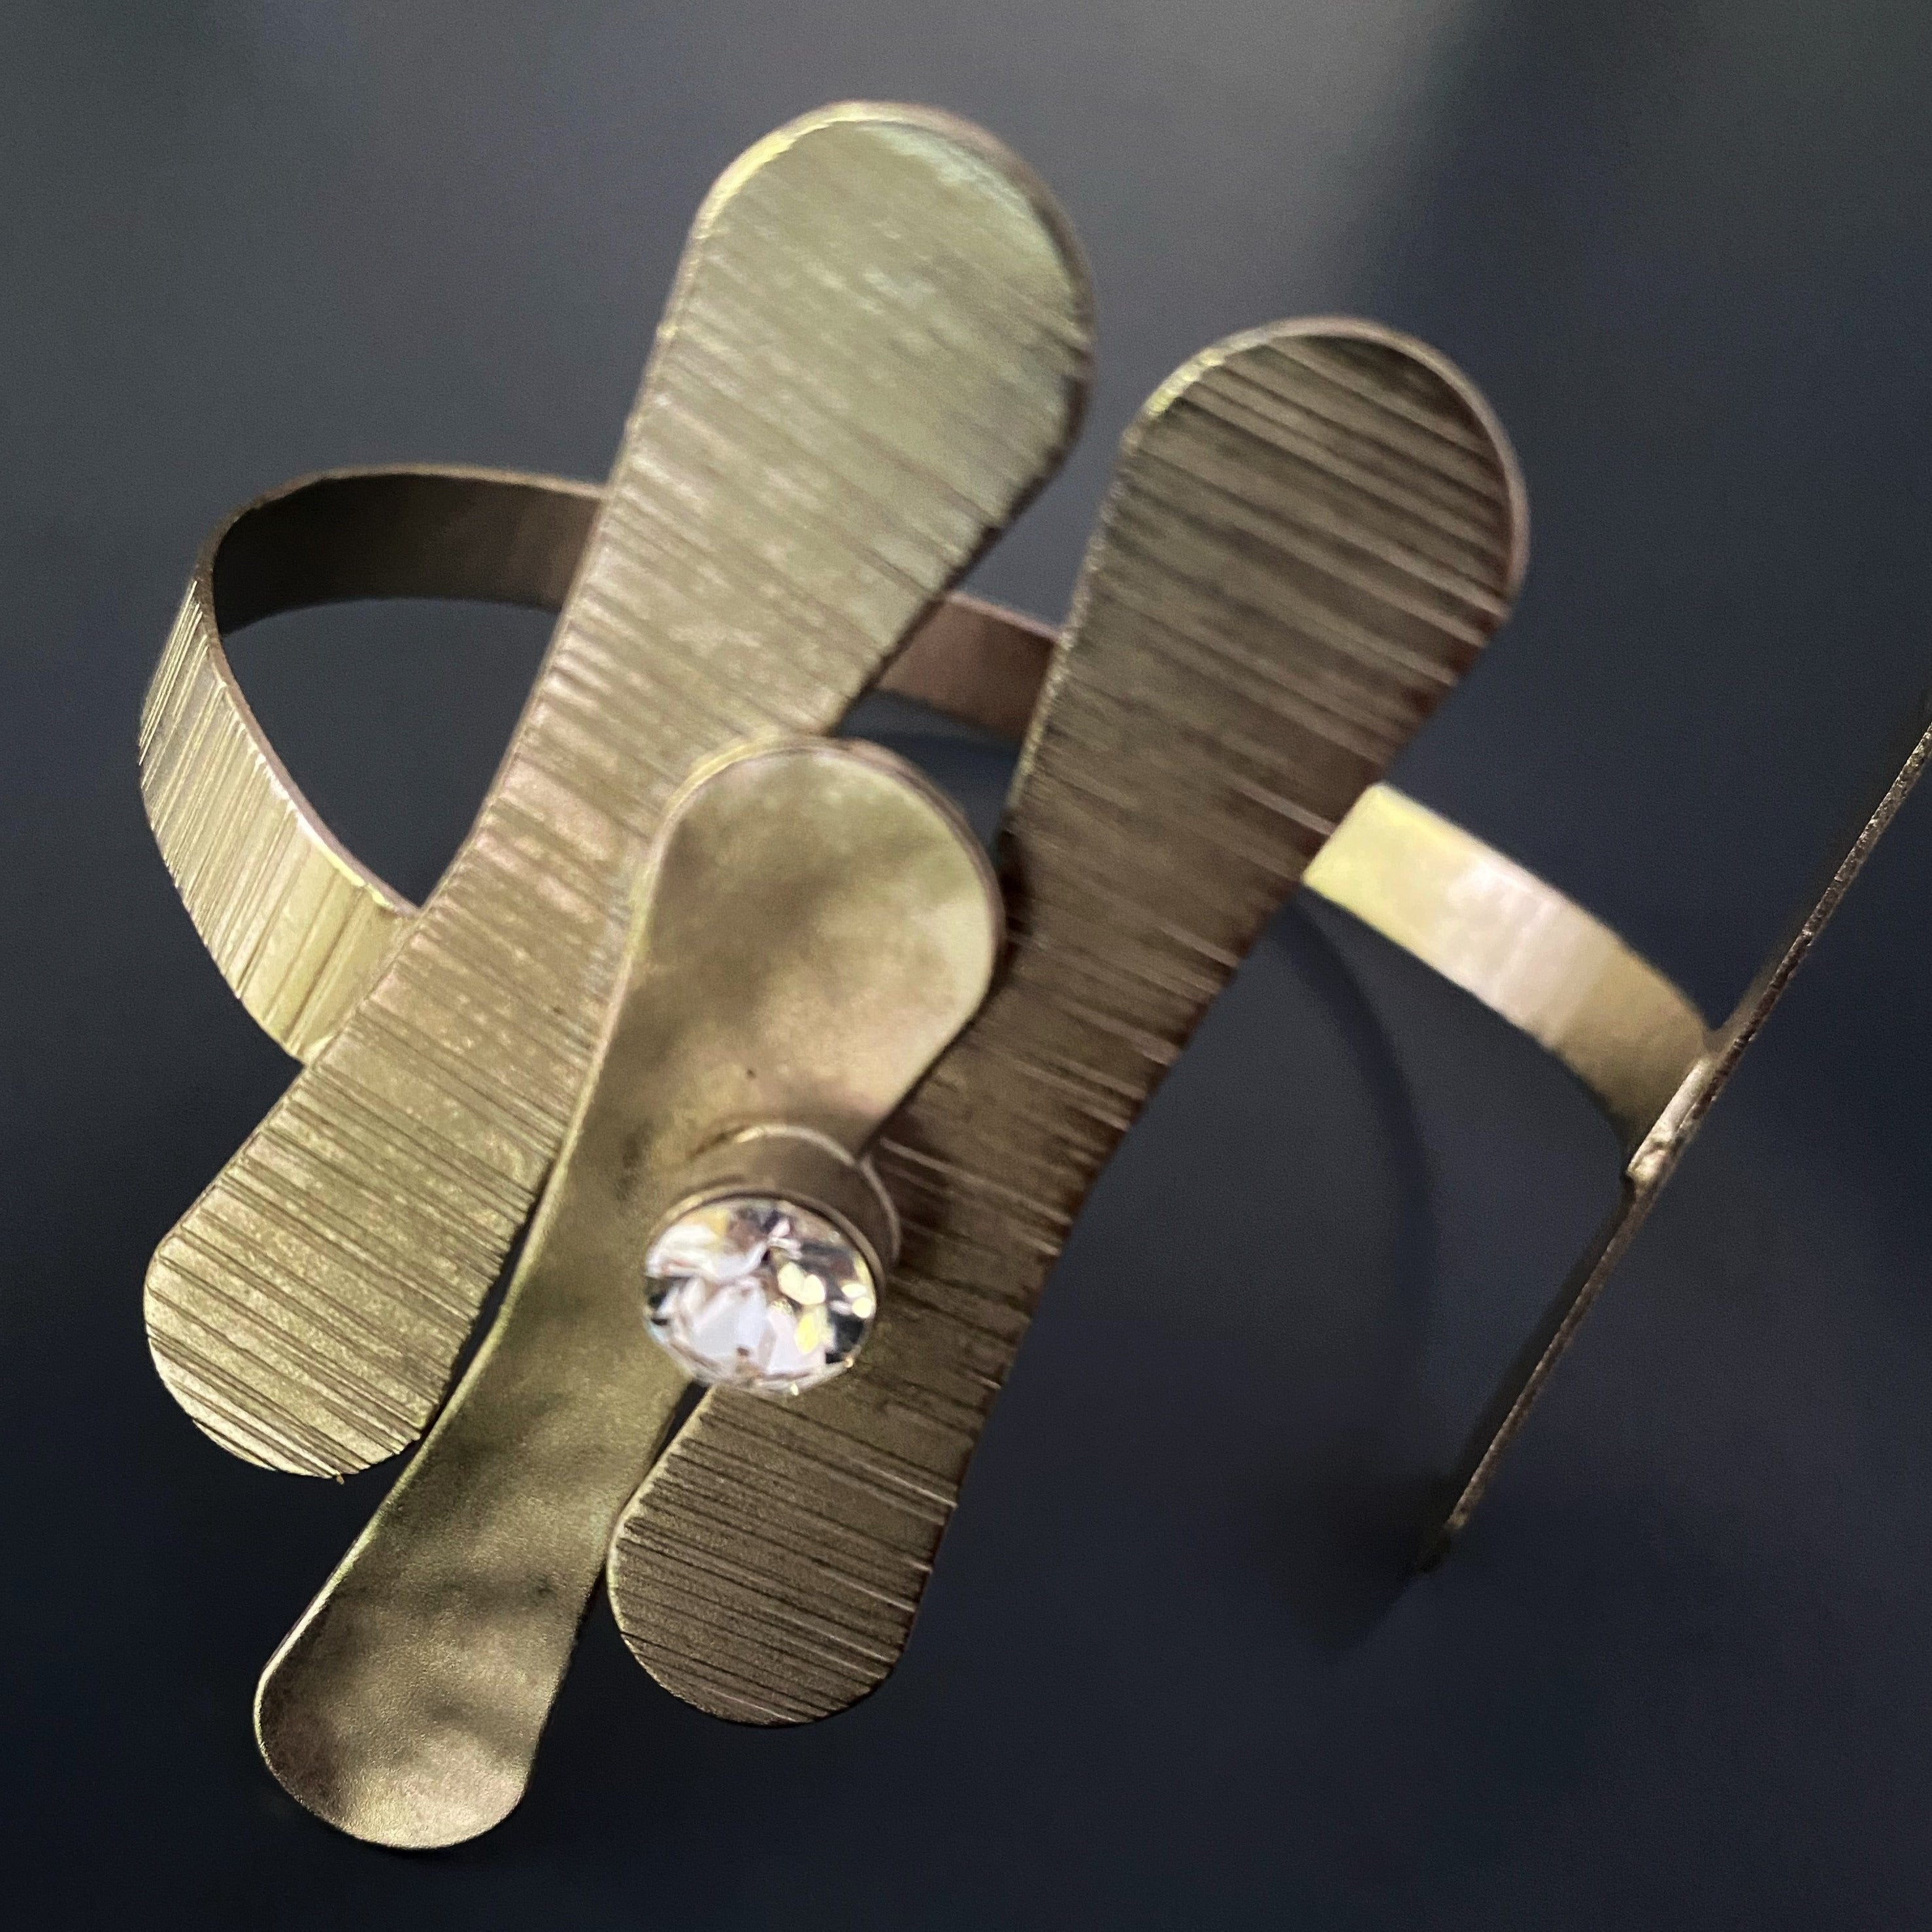 Elegant CZ Diamond Arm Cuff Bracelet for a touch of sparkle